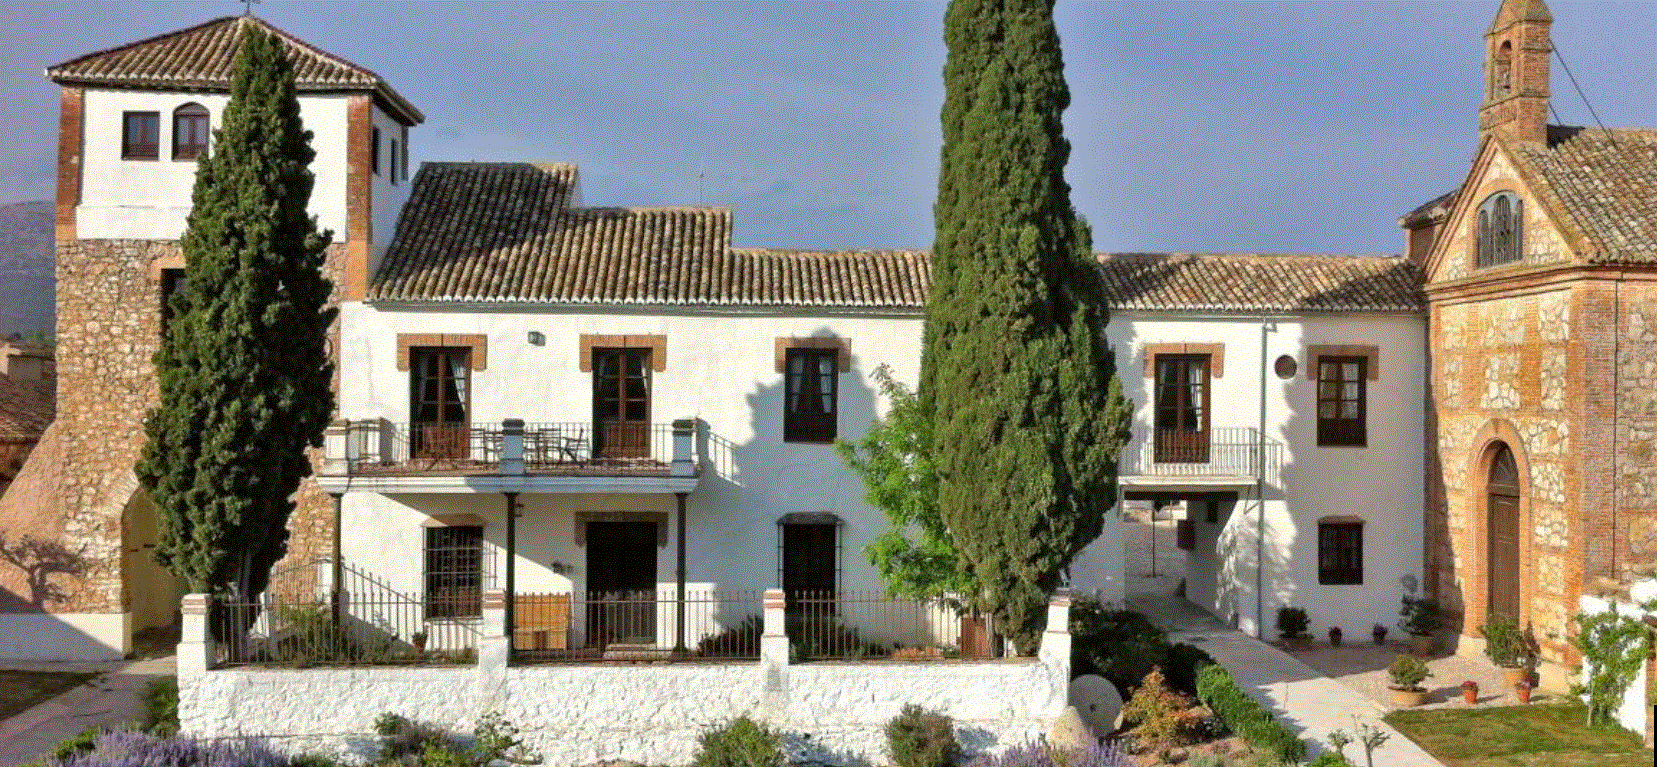 Hotel Cortijo del Marqués, Albolote, Granada.